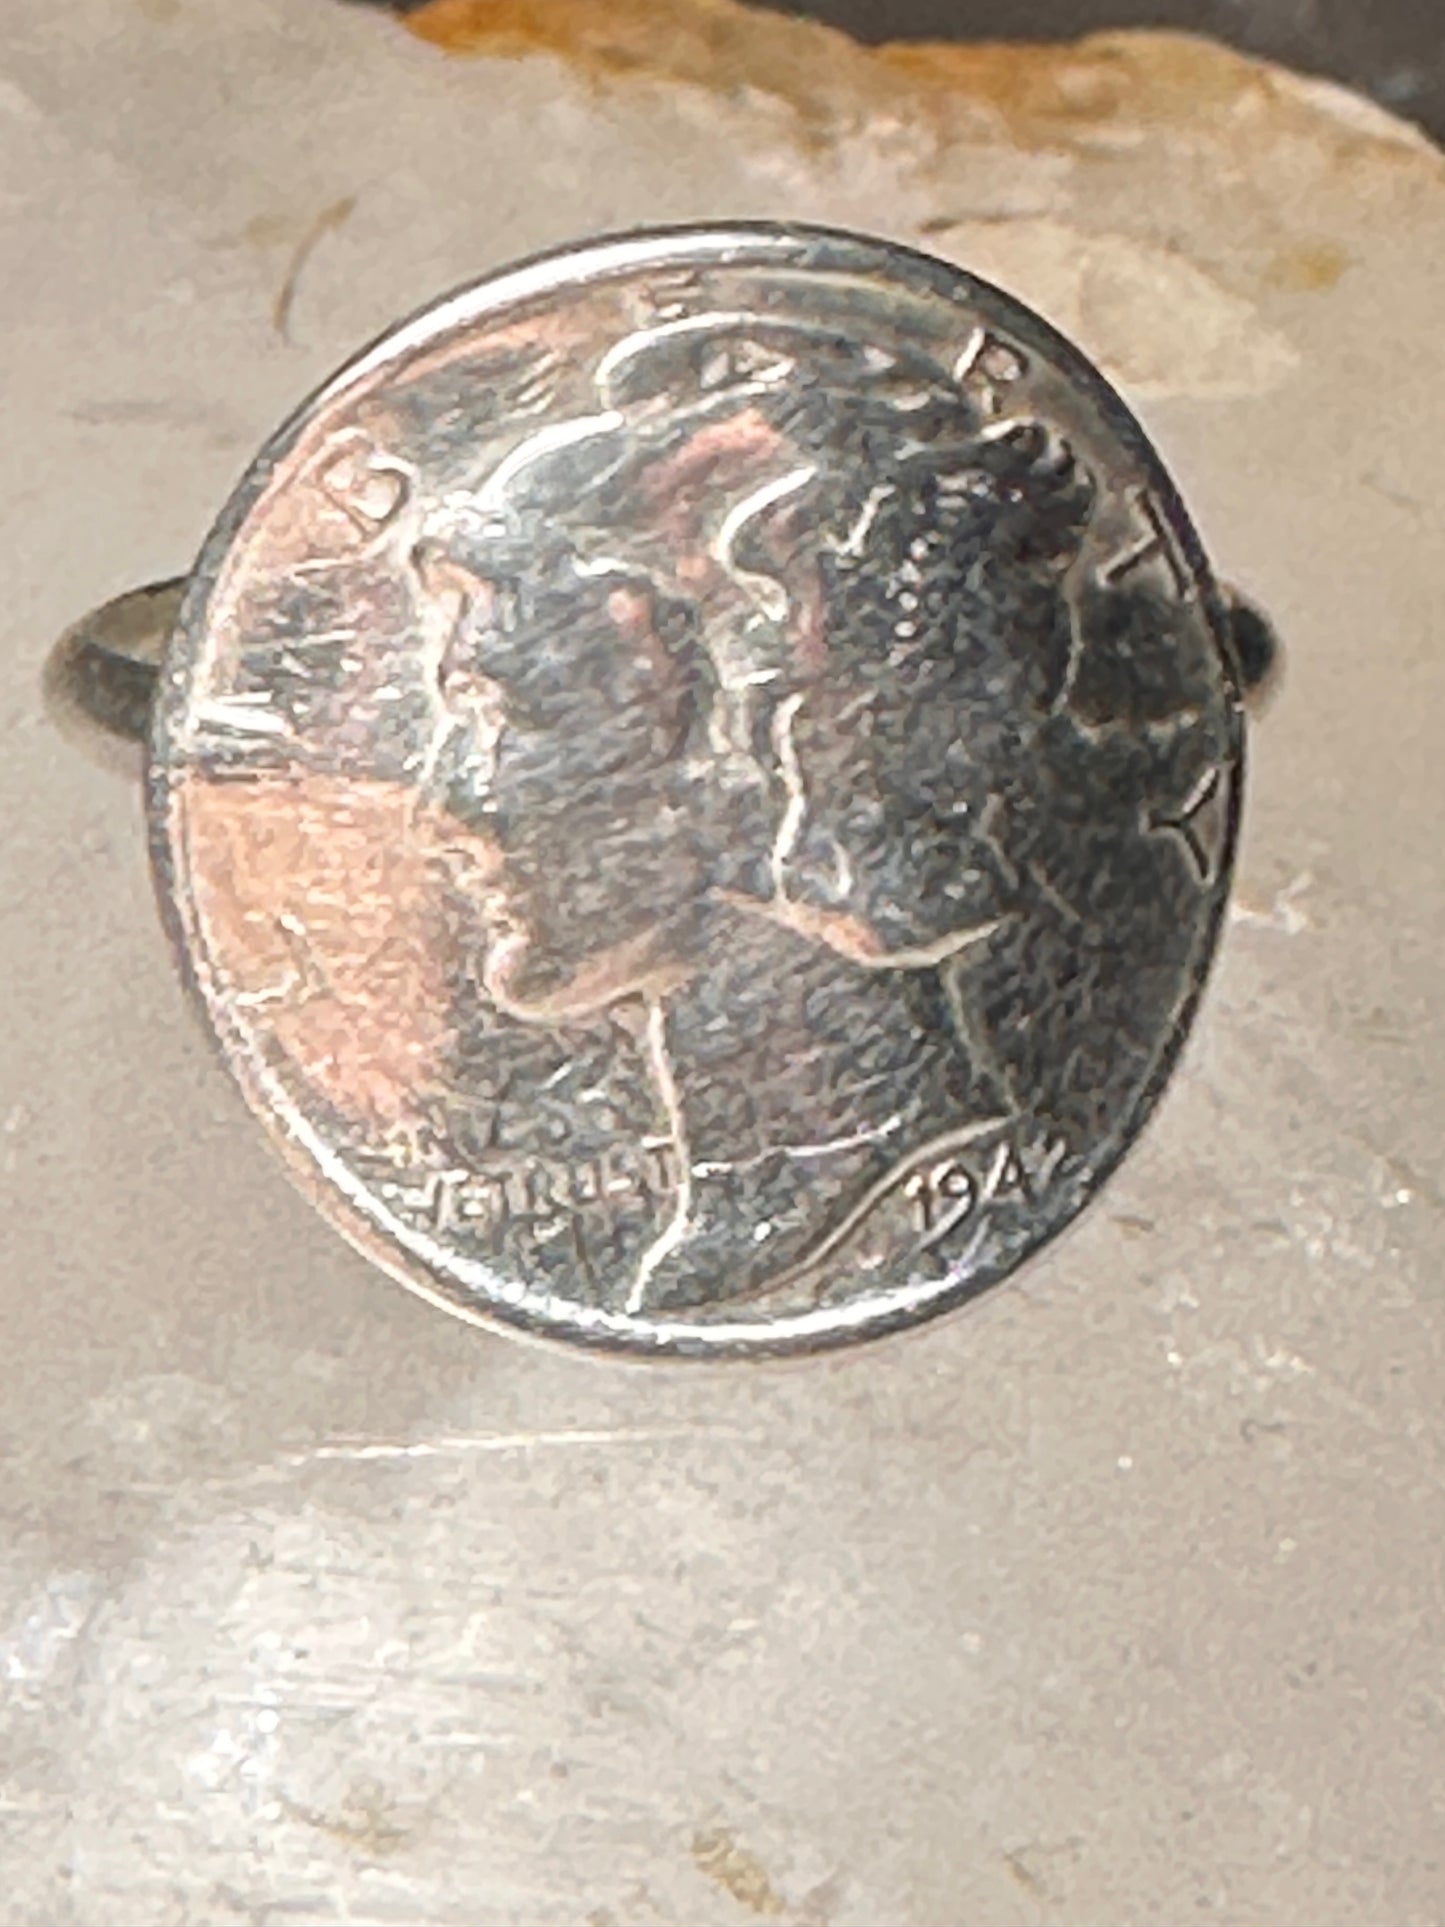 Mercury Dime ring 1942 size 7.75 sterling silver women